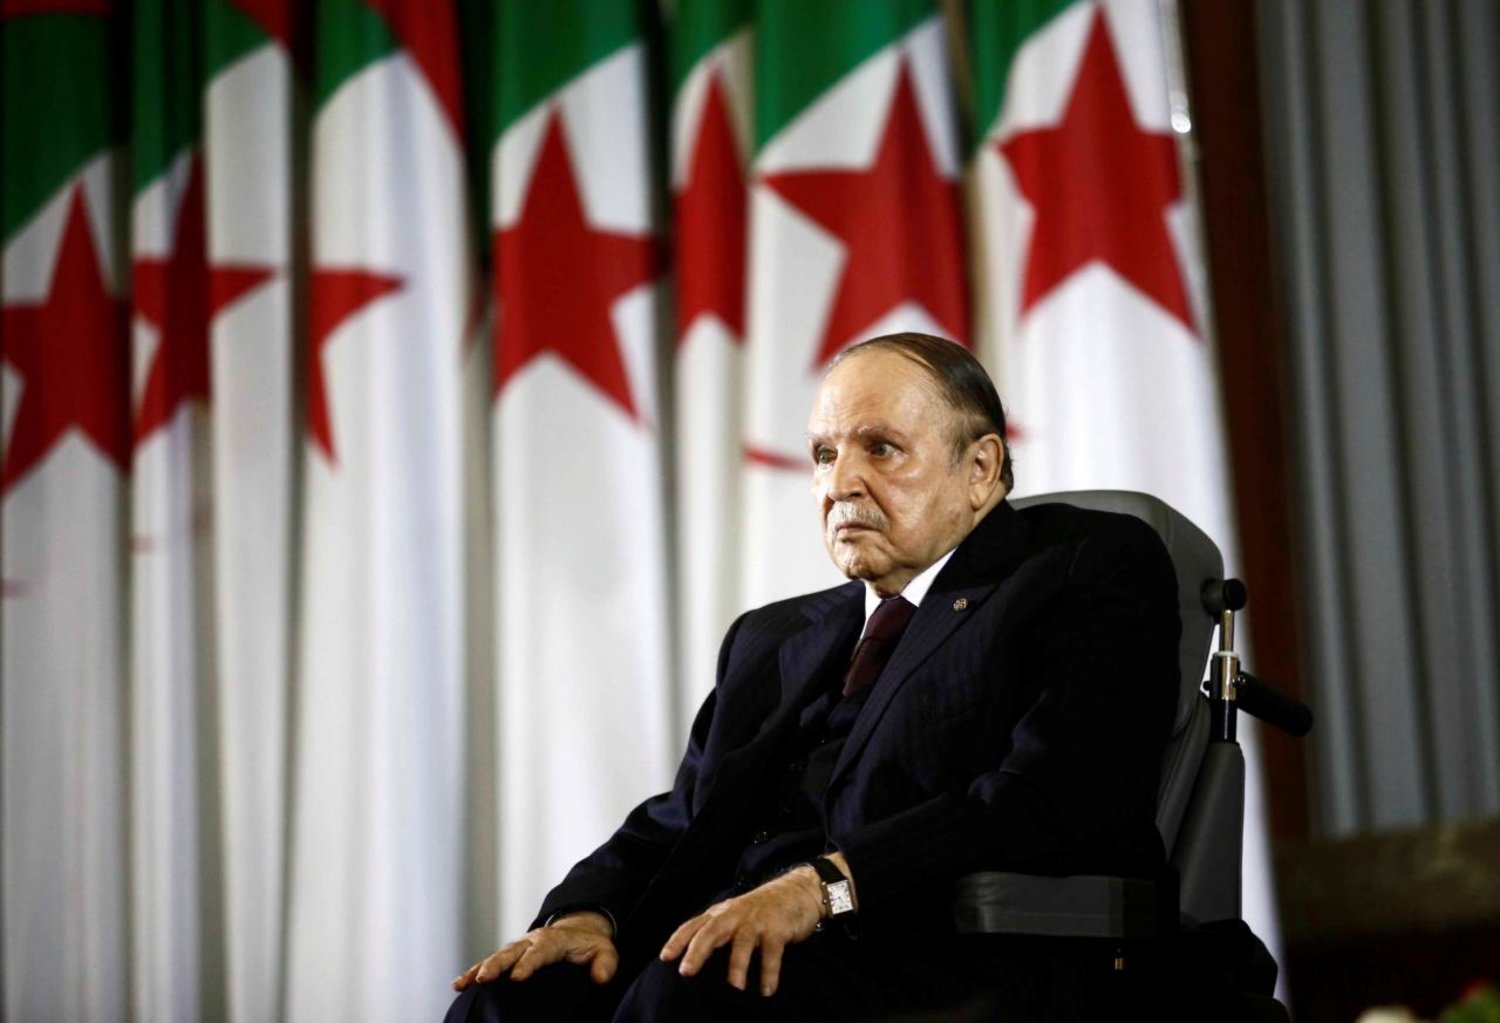 Algeiran President Abdelaziz Bouteflika during a swearing-in ceremony in Algiers April 28, 2014. REUTERS/Ramzi Boudina/File Photo